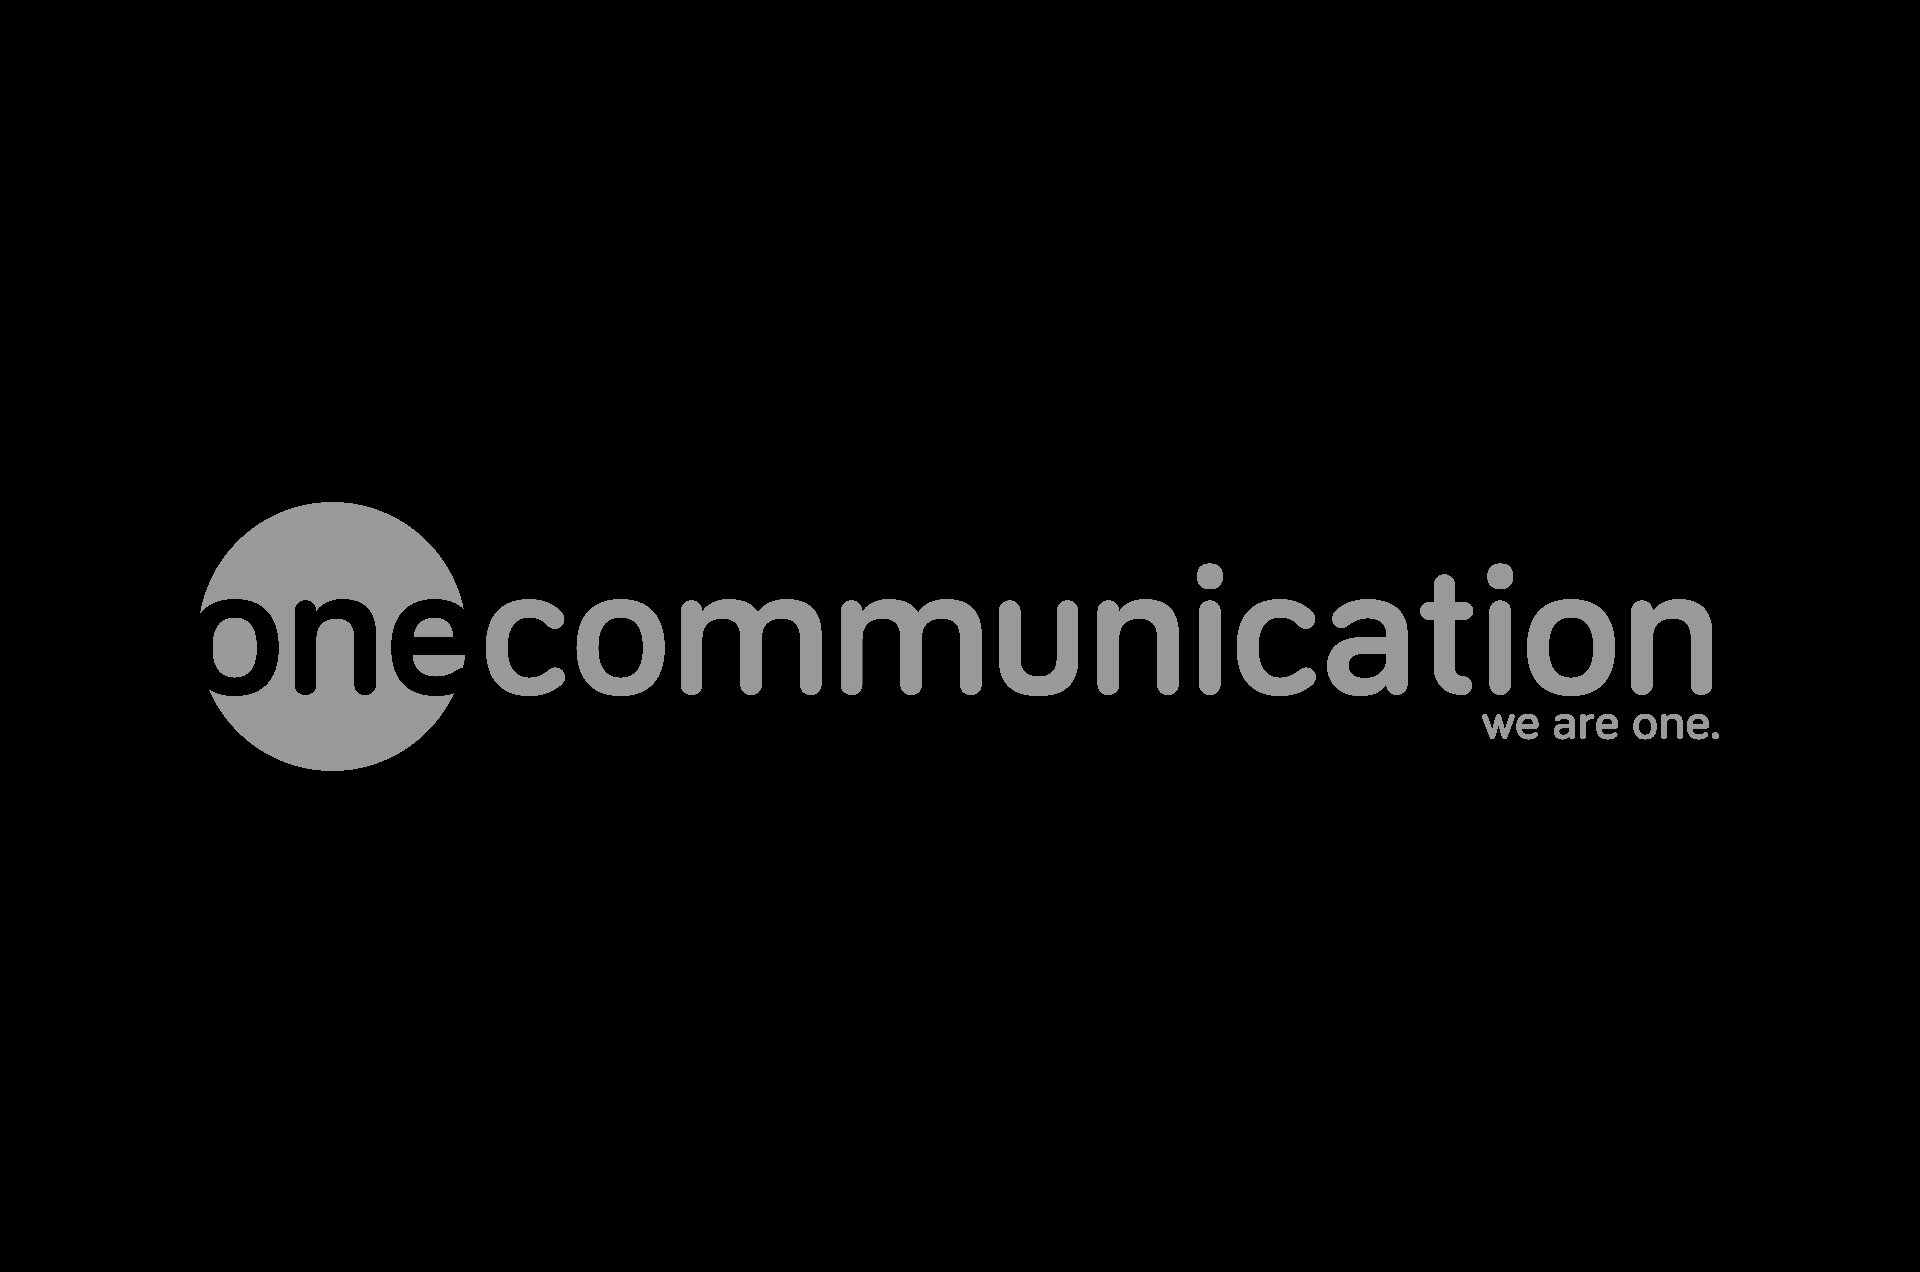 onecommunication Logo.jpg